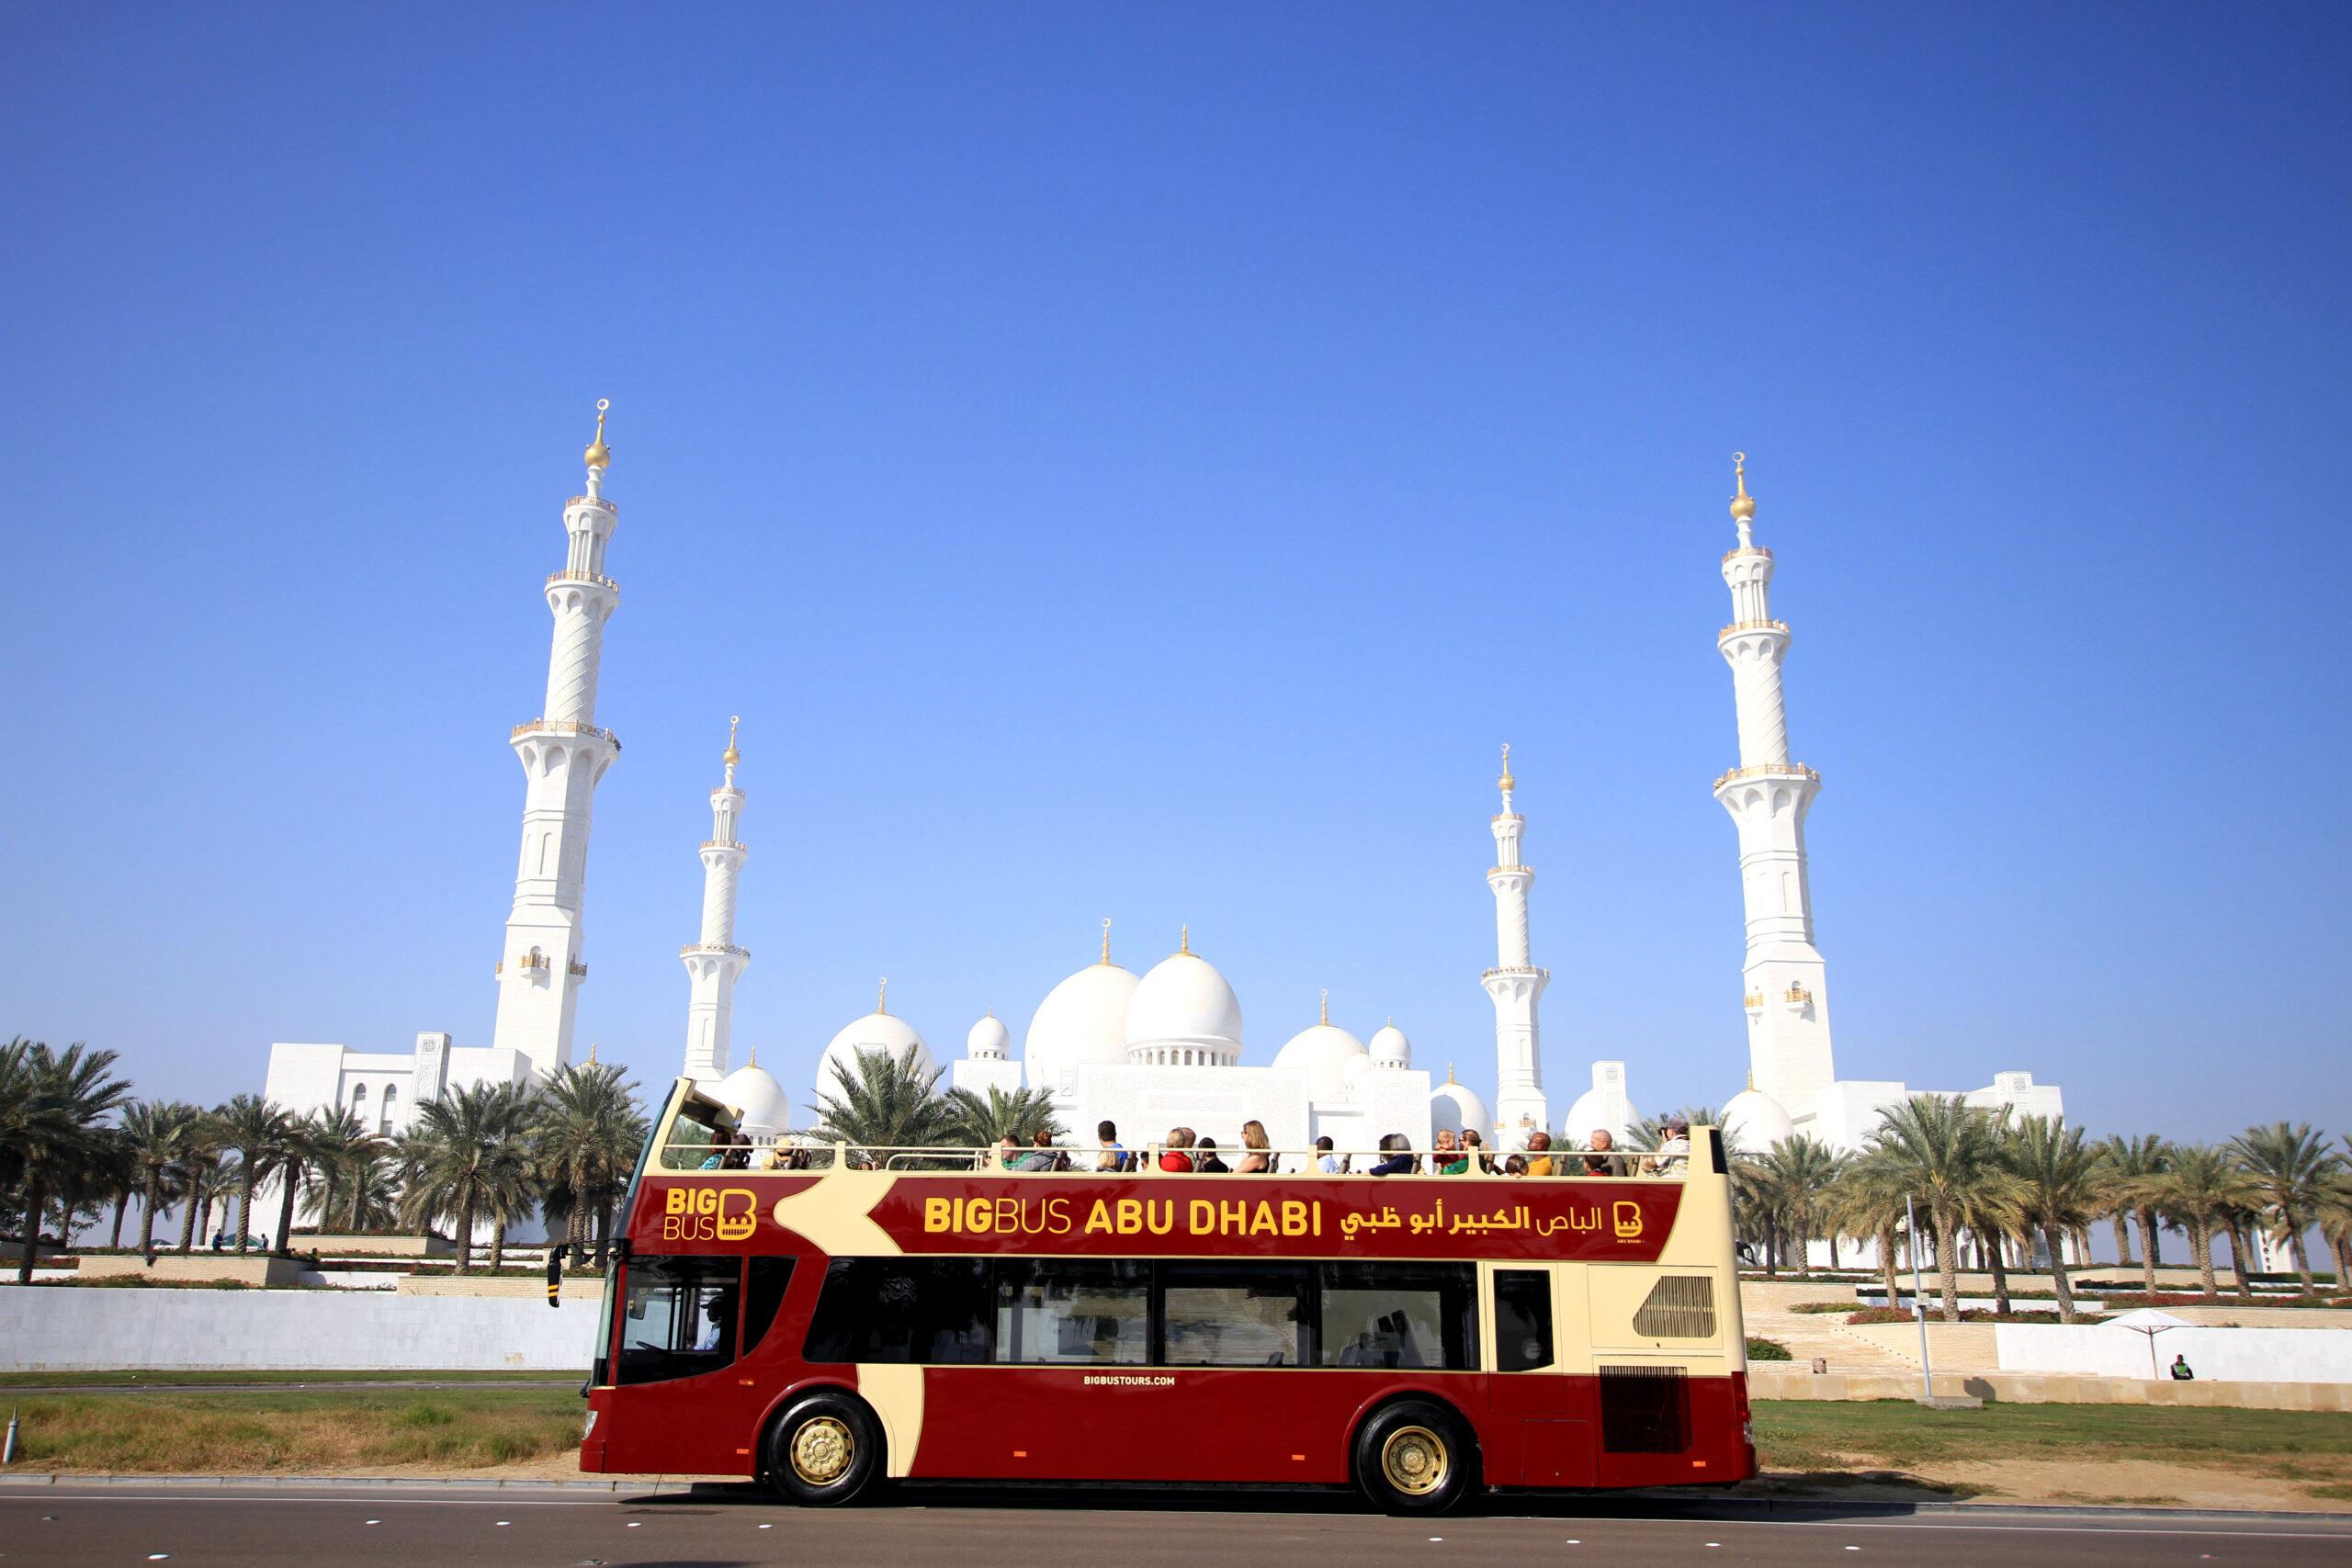 Abu Dhabi with Big Bus Premium Ticket